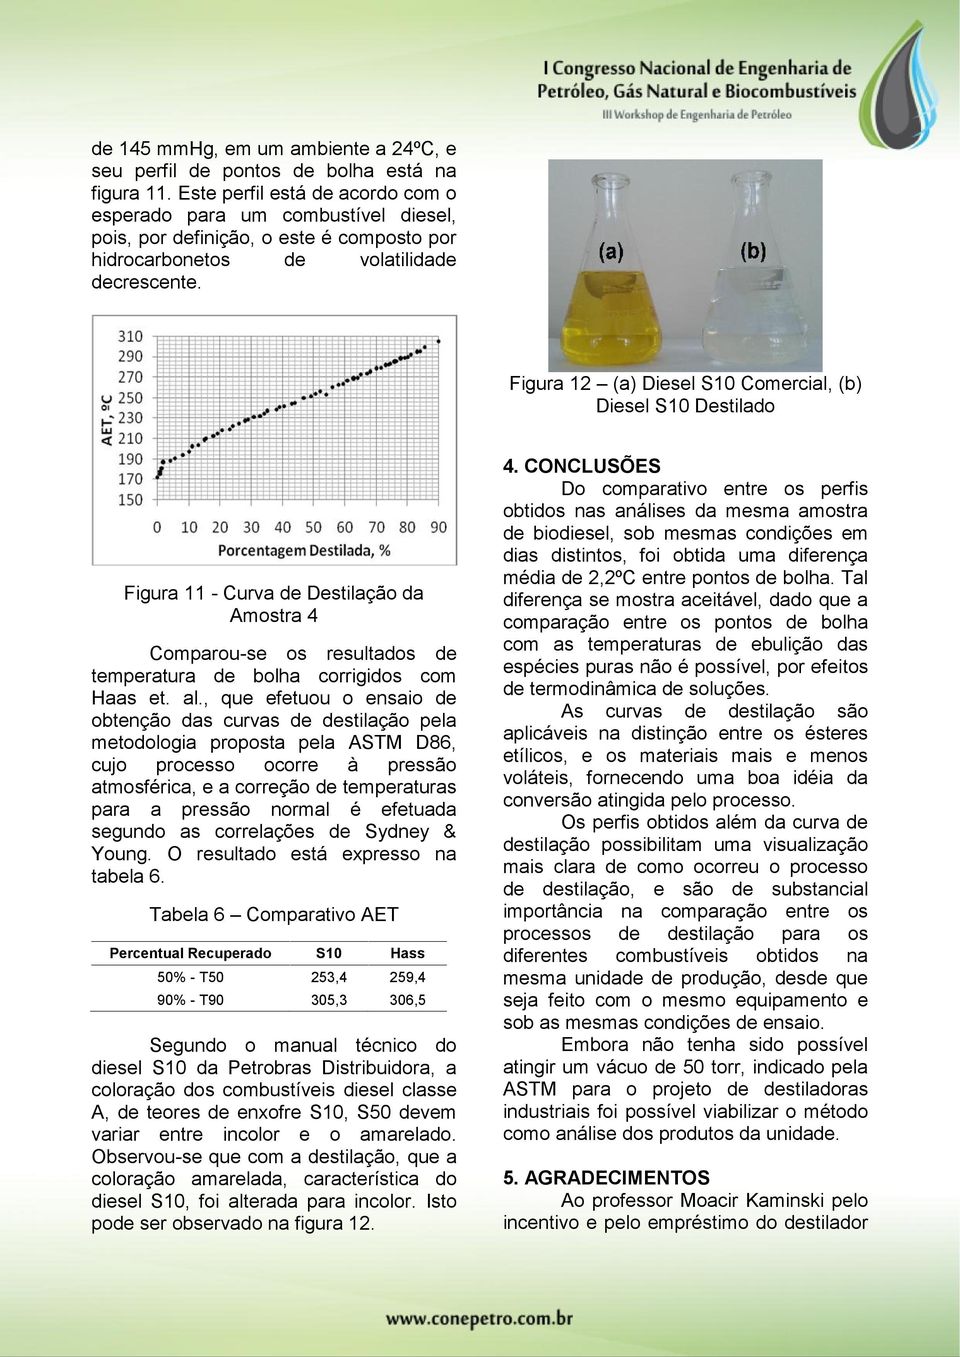 Figura 12 (a) Diesel S10 Comercial, (b) Diesel S10 Destilado Figura 11 - Curva de Destilação da 4 Comparou-se os resultados de temperatura de bolha corrigidos com Haas et. al.